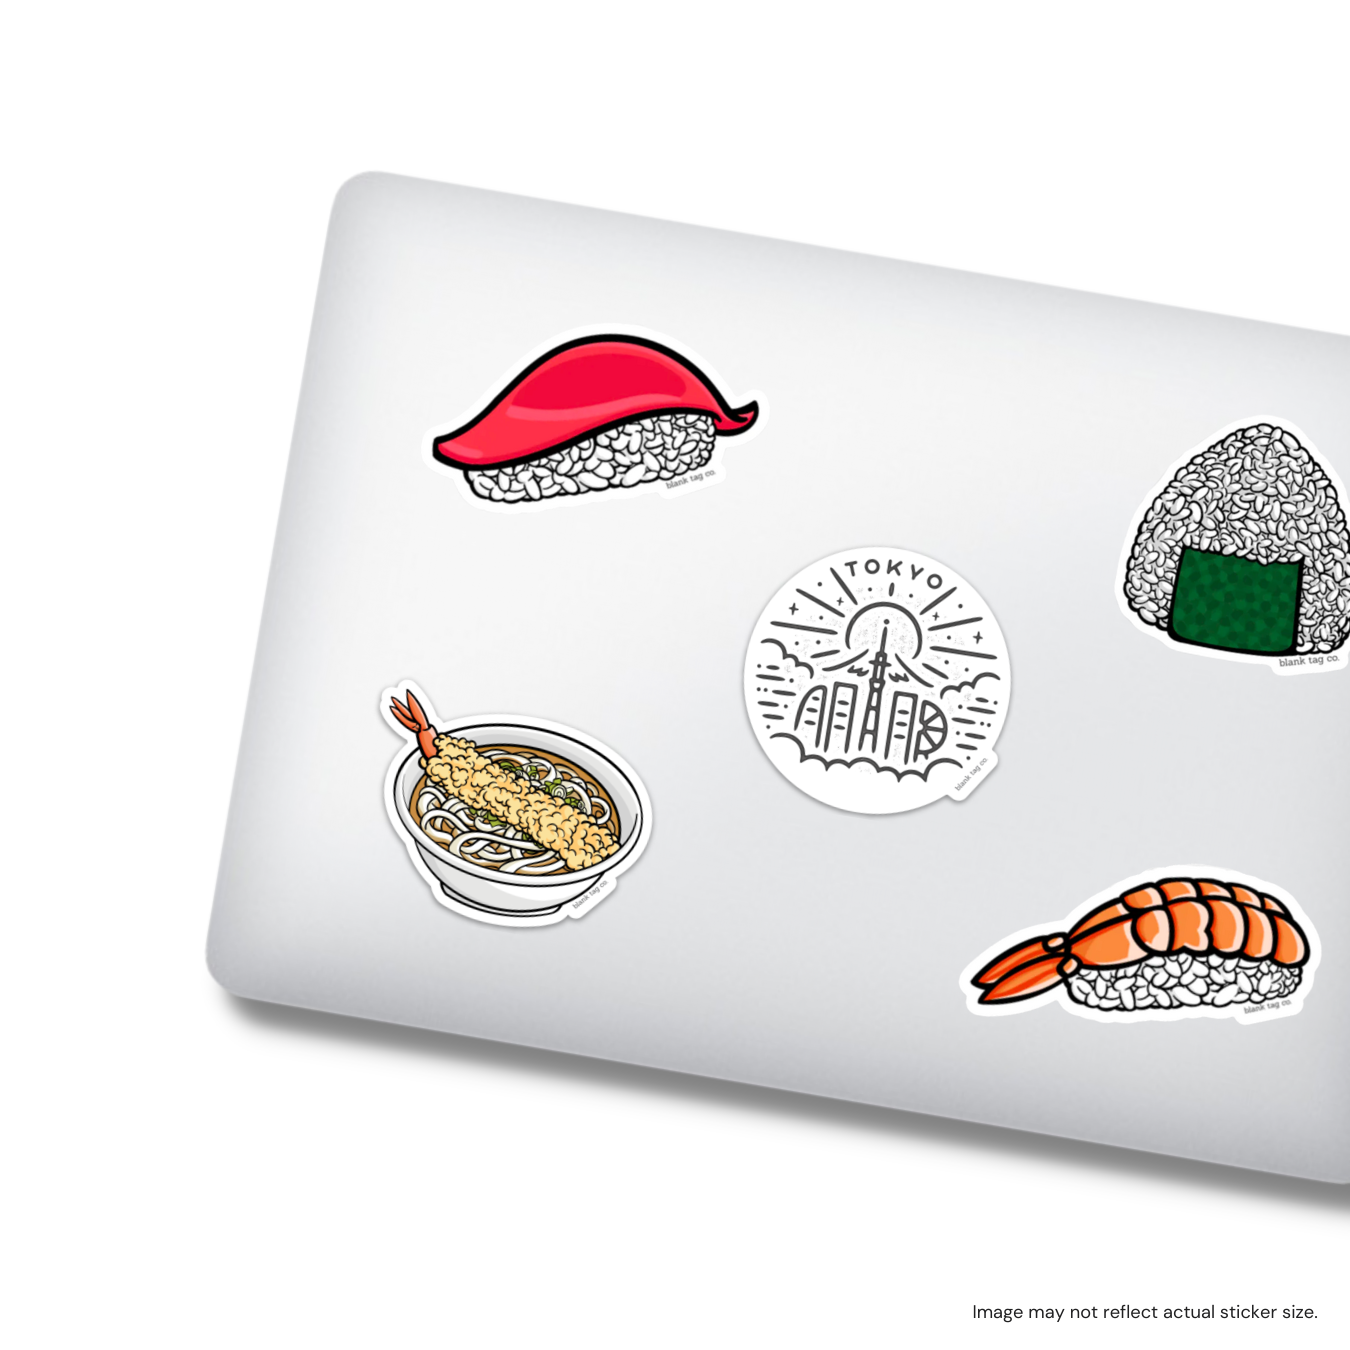 The Shrimp Sushi Sticker